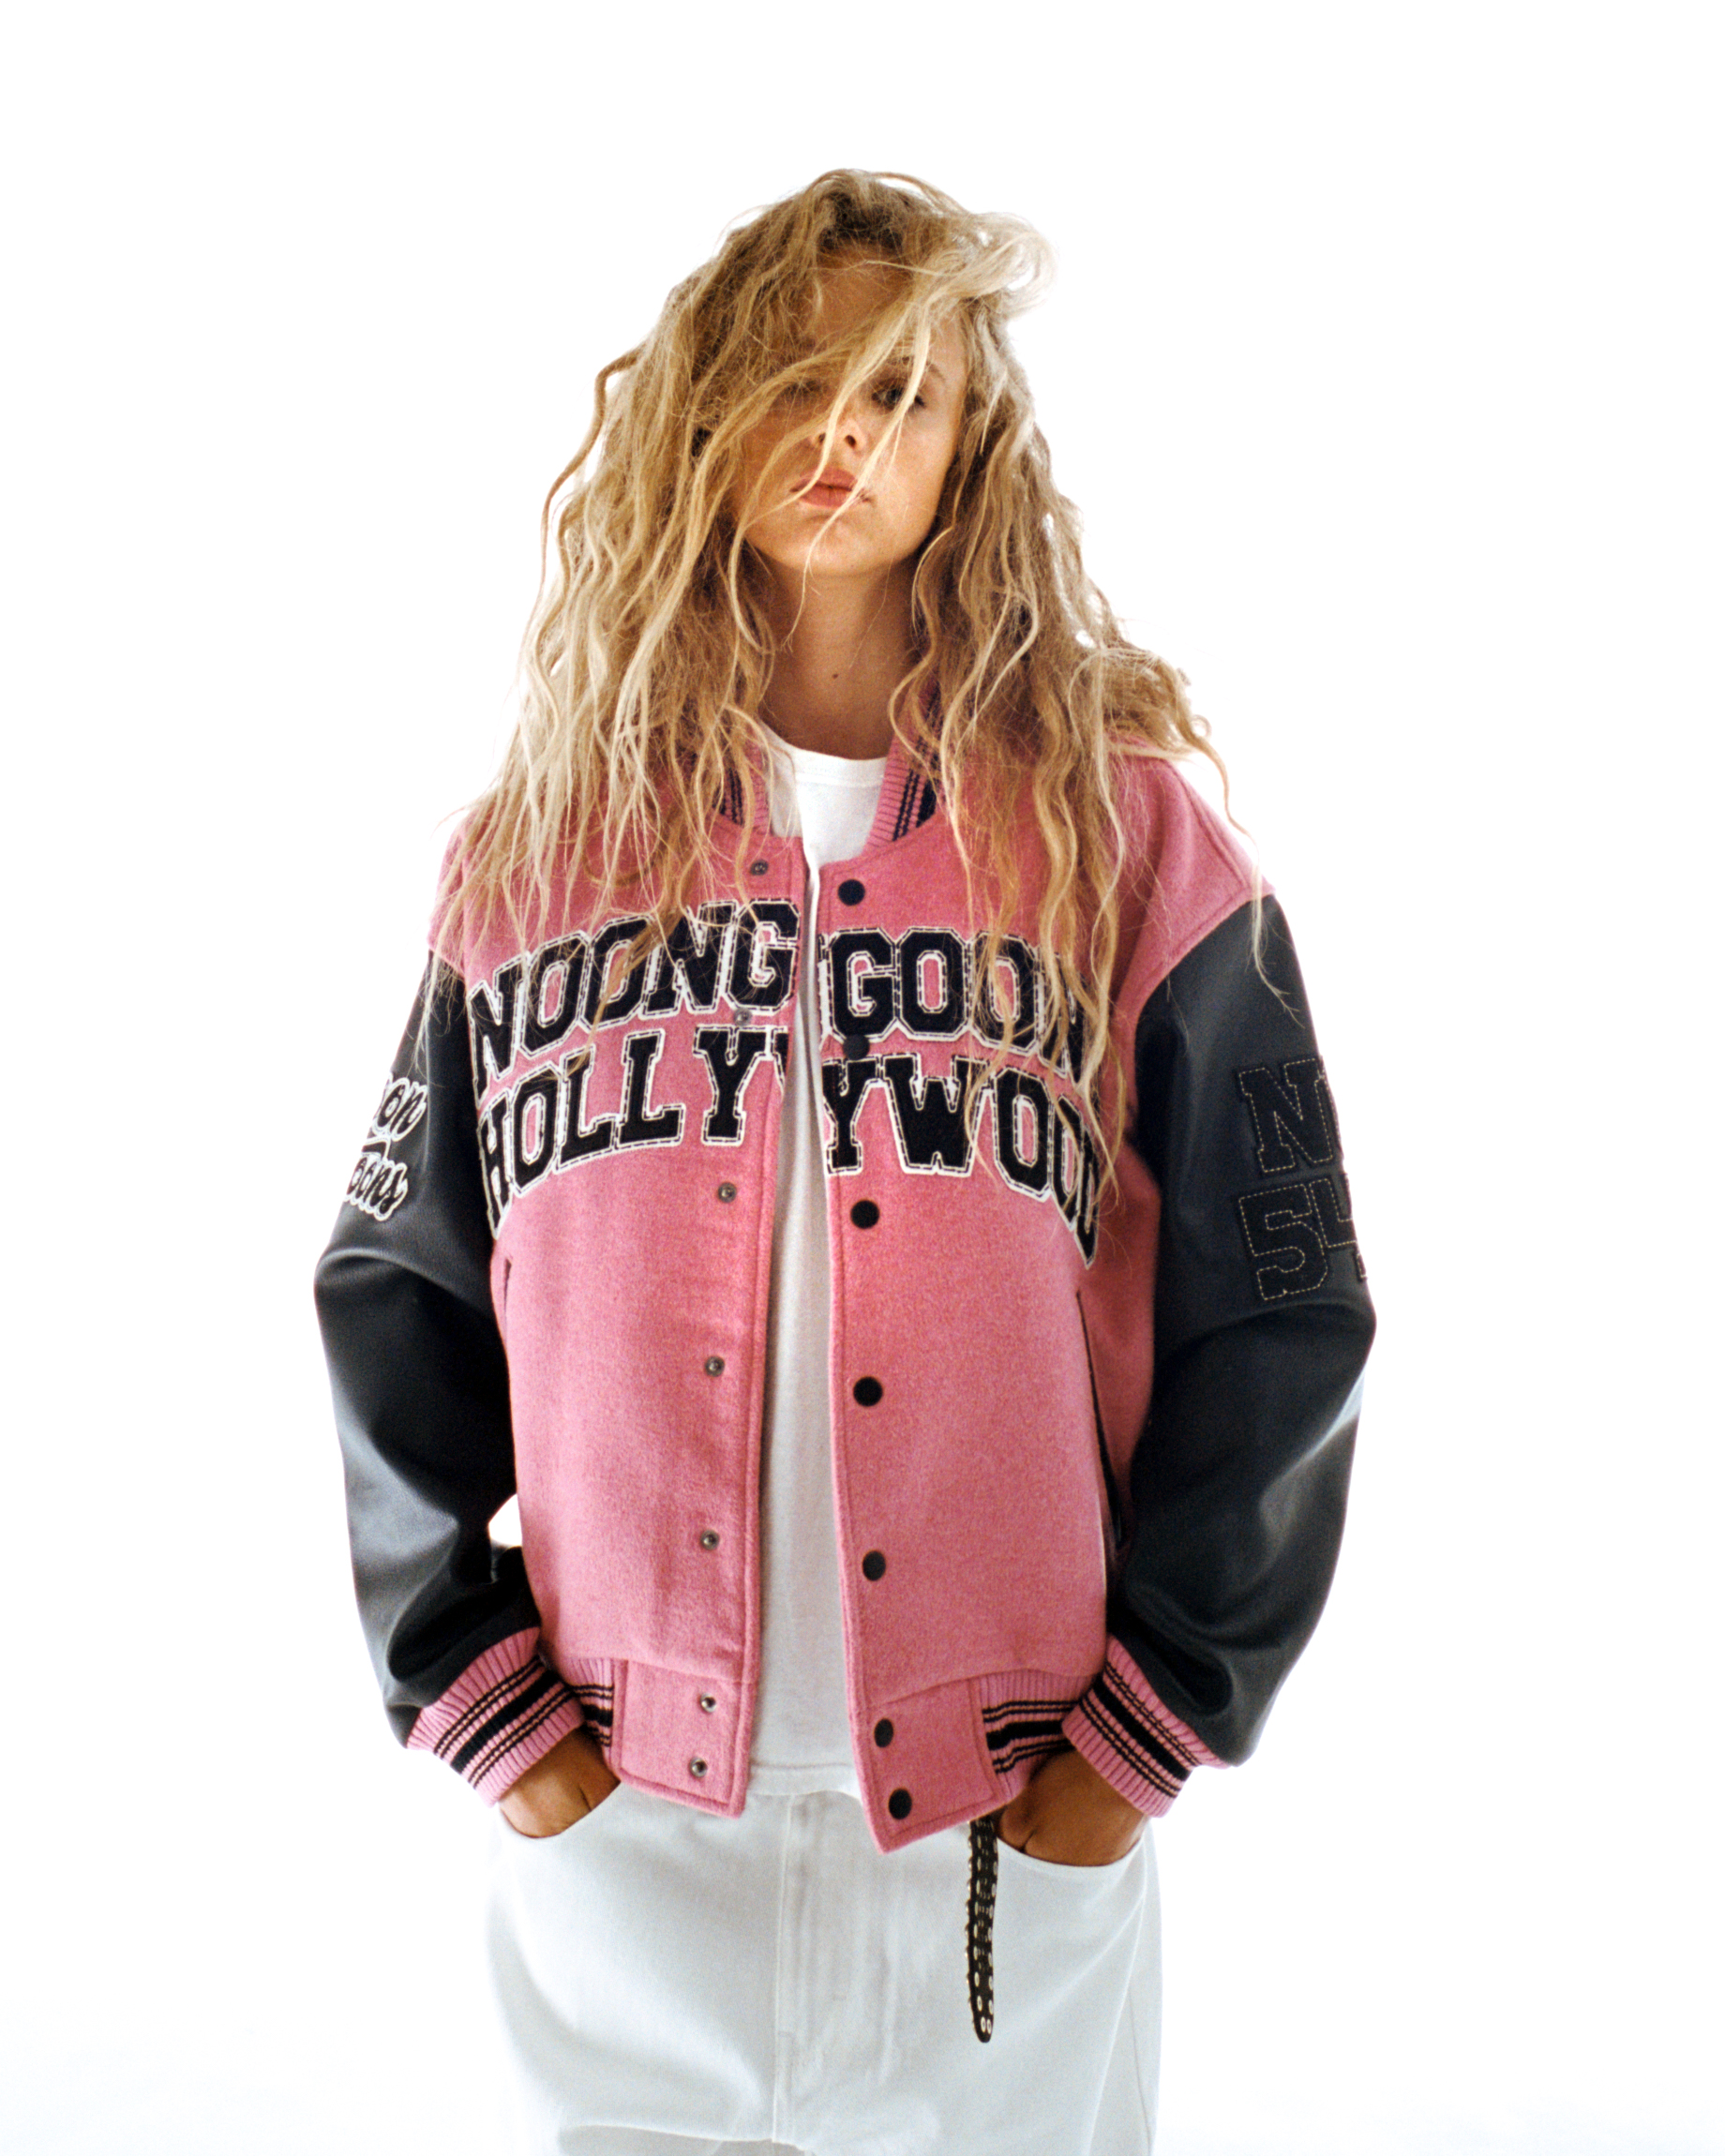 Home Run Blush Pink Suede Varsity Jacket